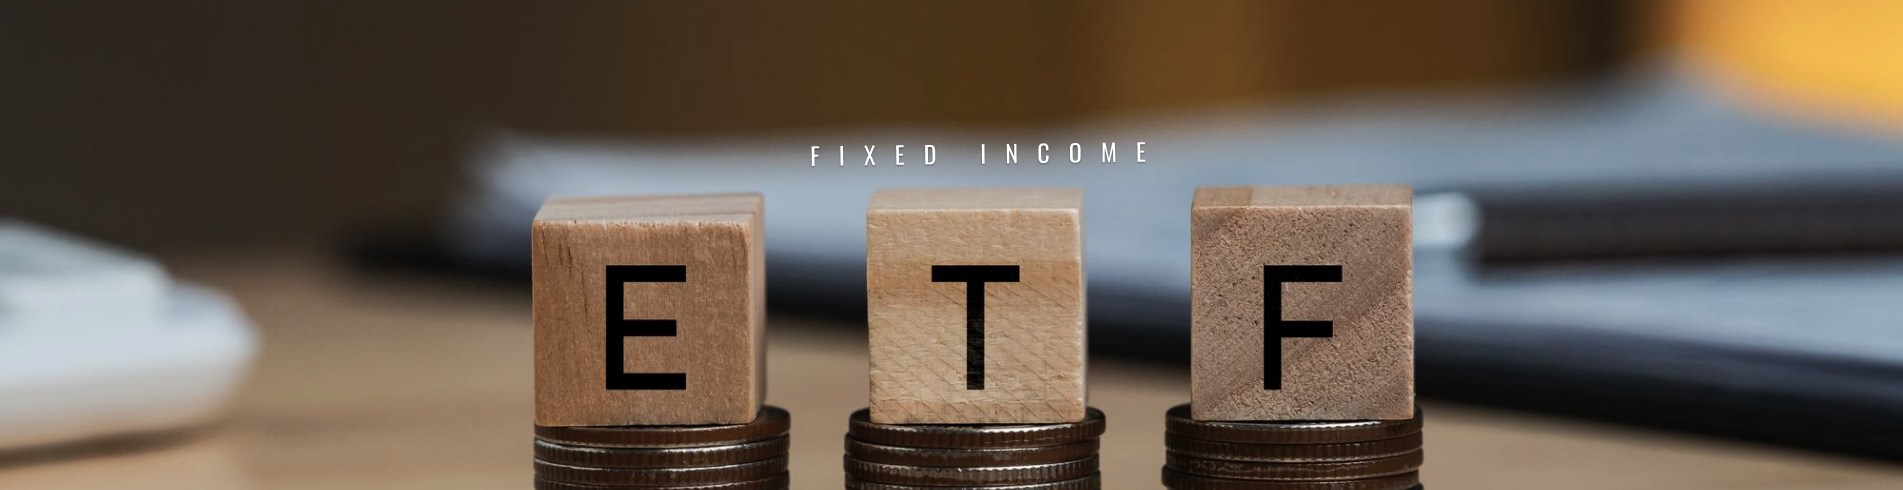 Fixed-Income ETFs